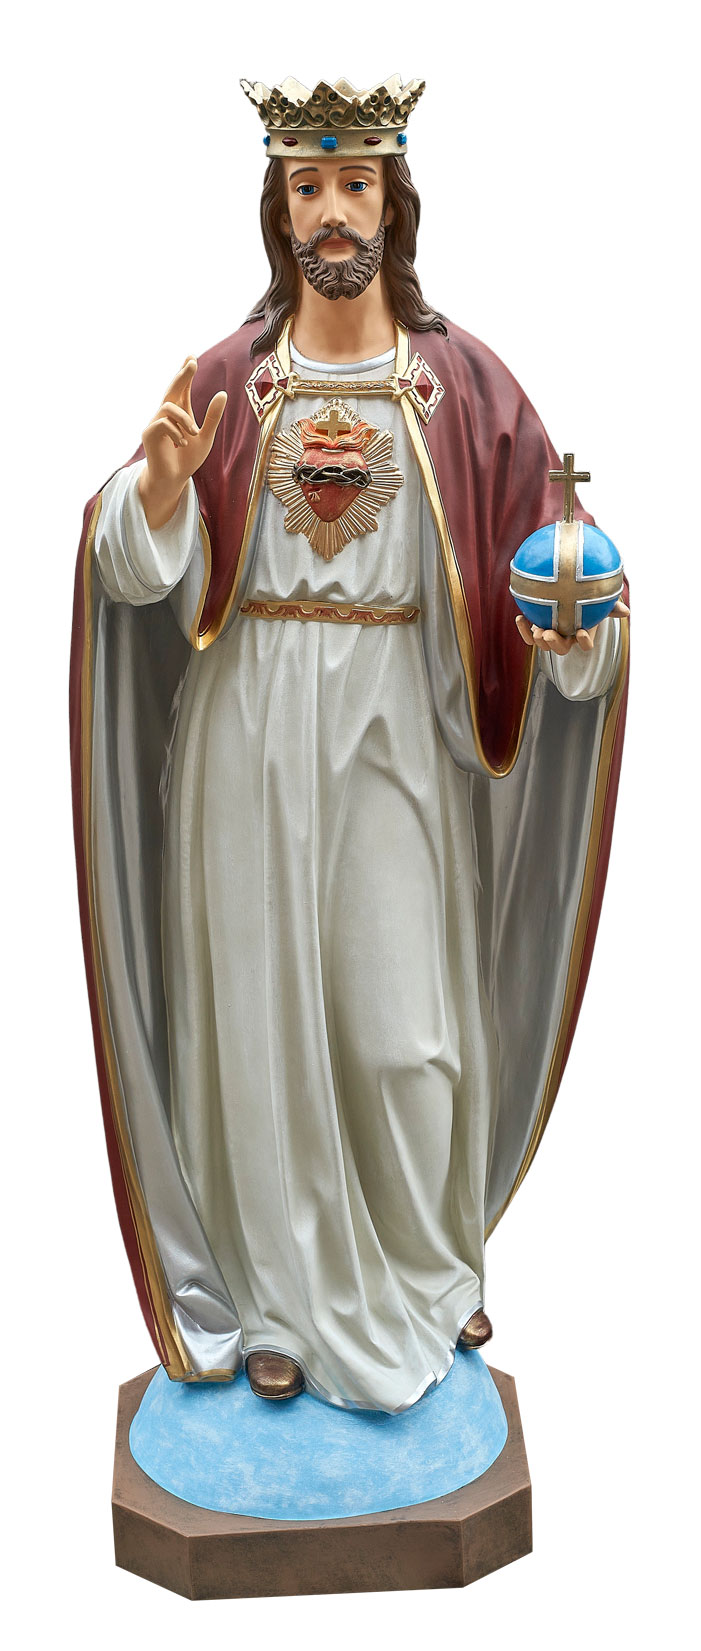 Chrystus Król - Figura nagrobna - 155 cm - R 42